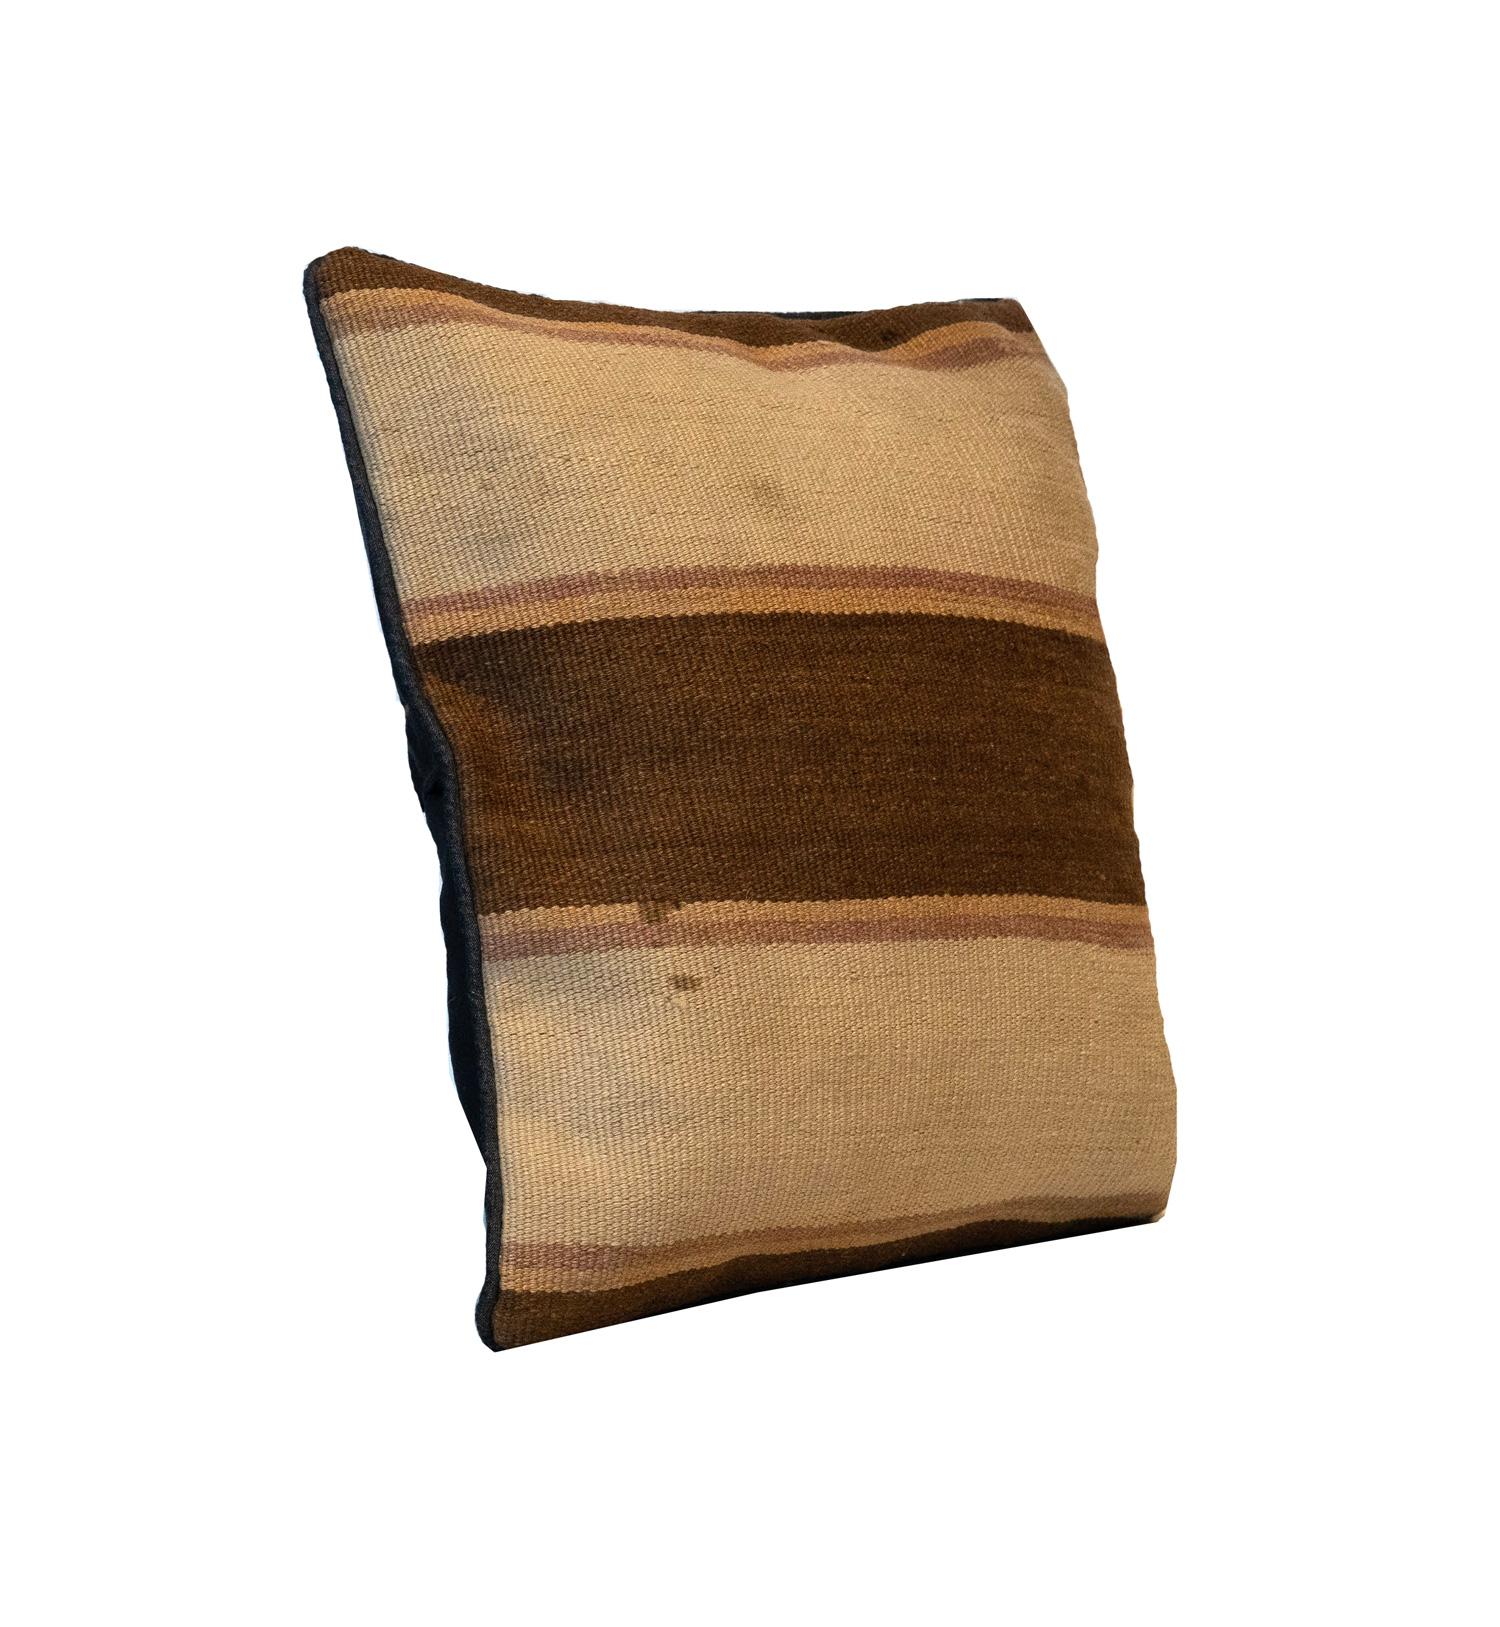 Afghan Beige Brown Wool Kilim Cushion Cover Handwoven Oriental Scatter Cushion